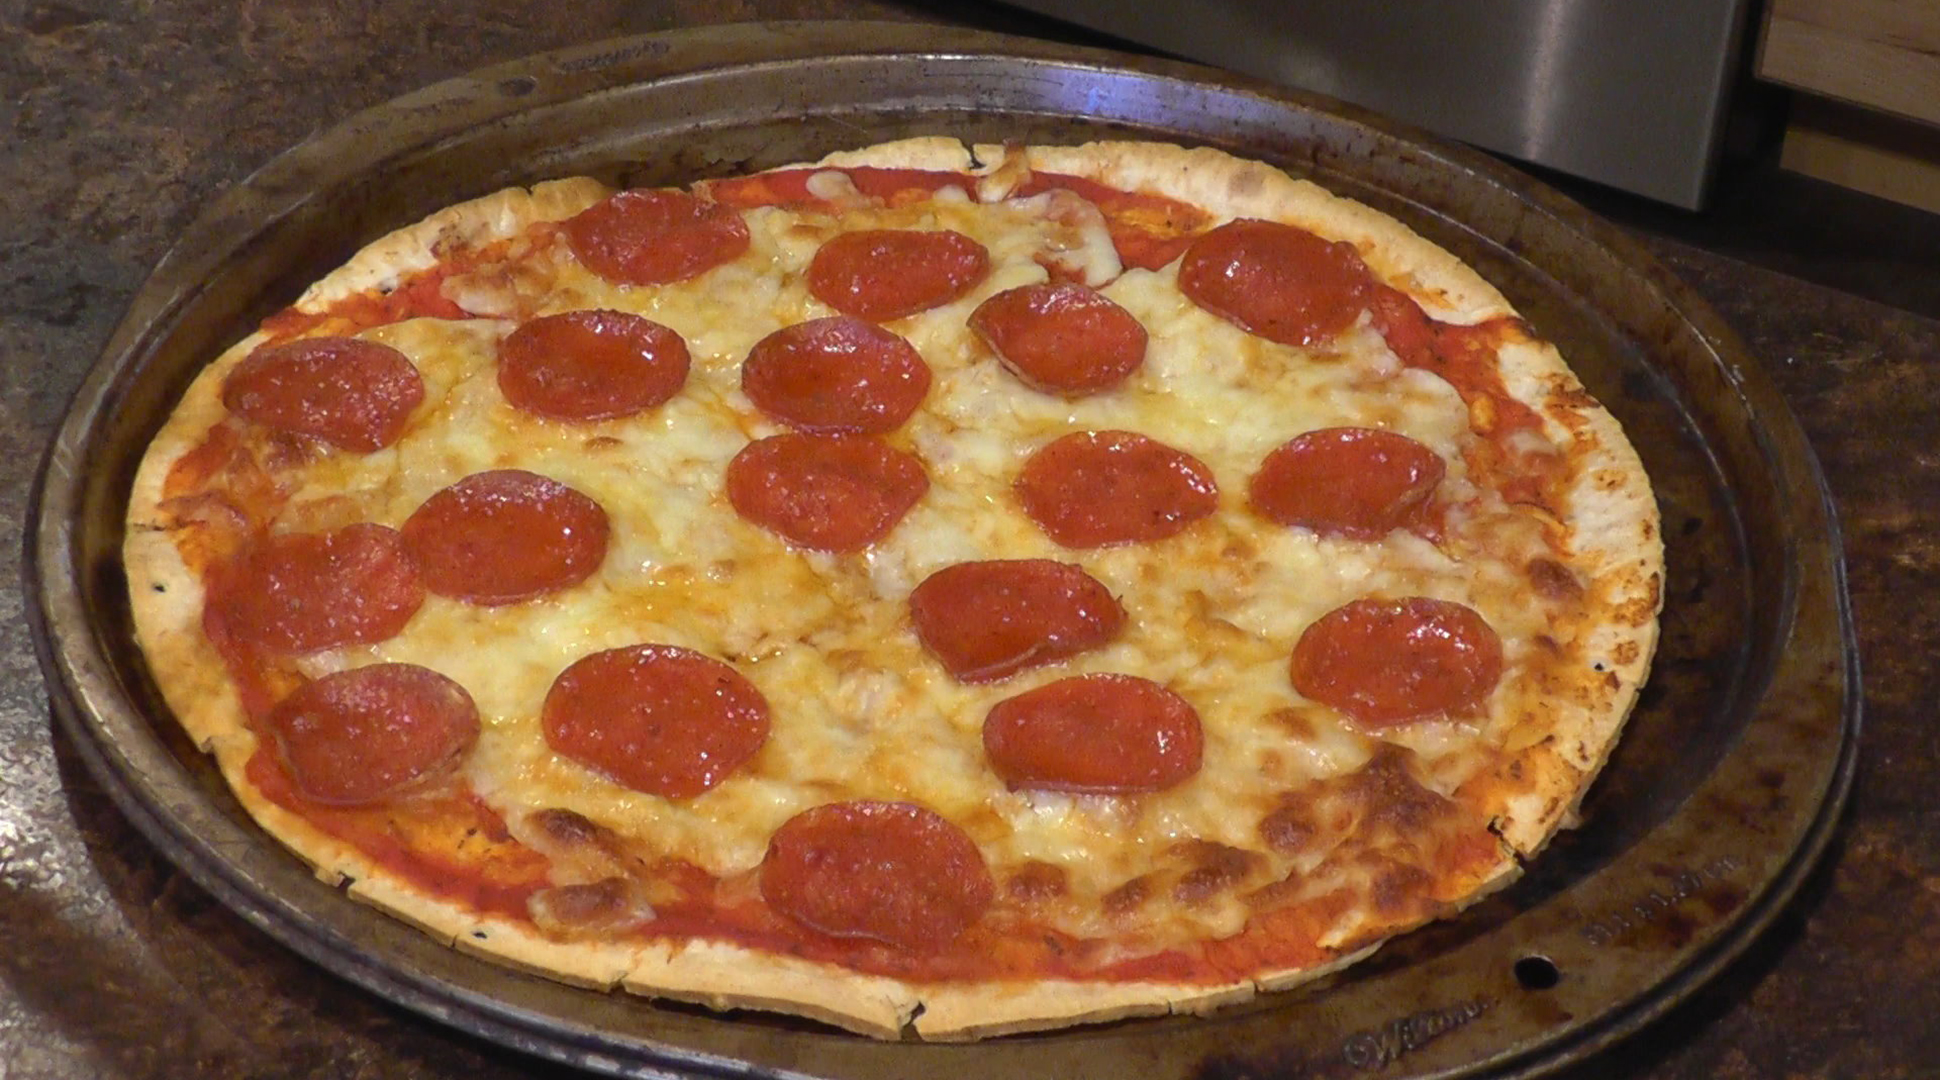 Celebrate National Pizza Day!